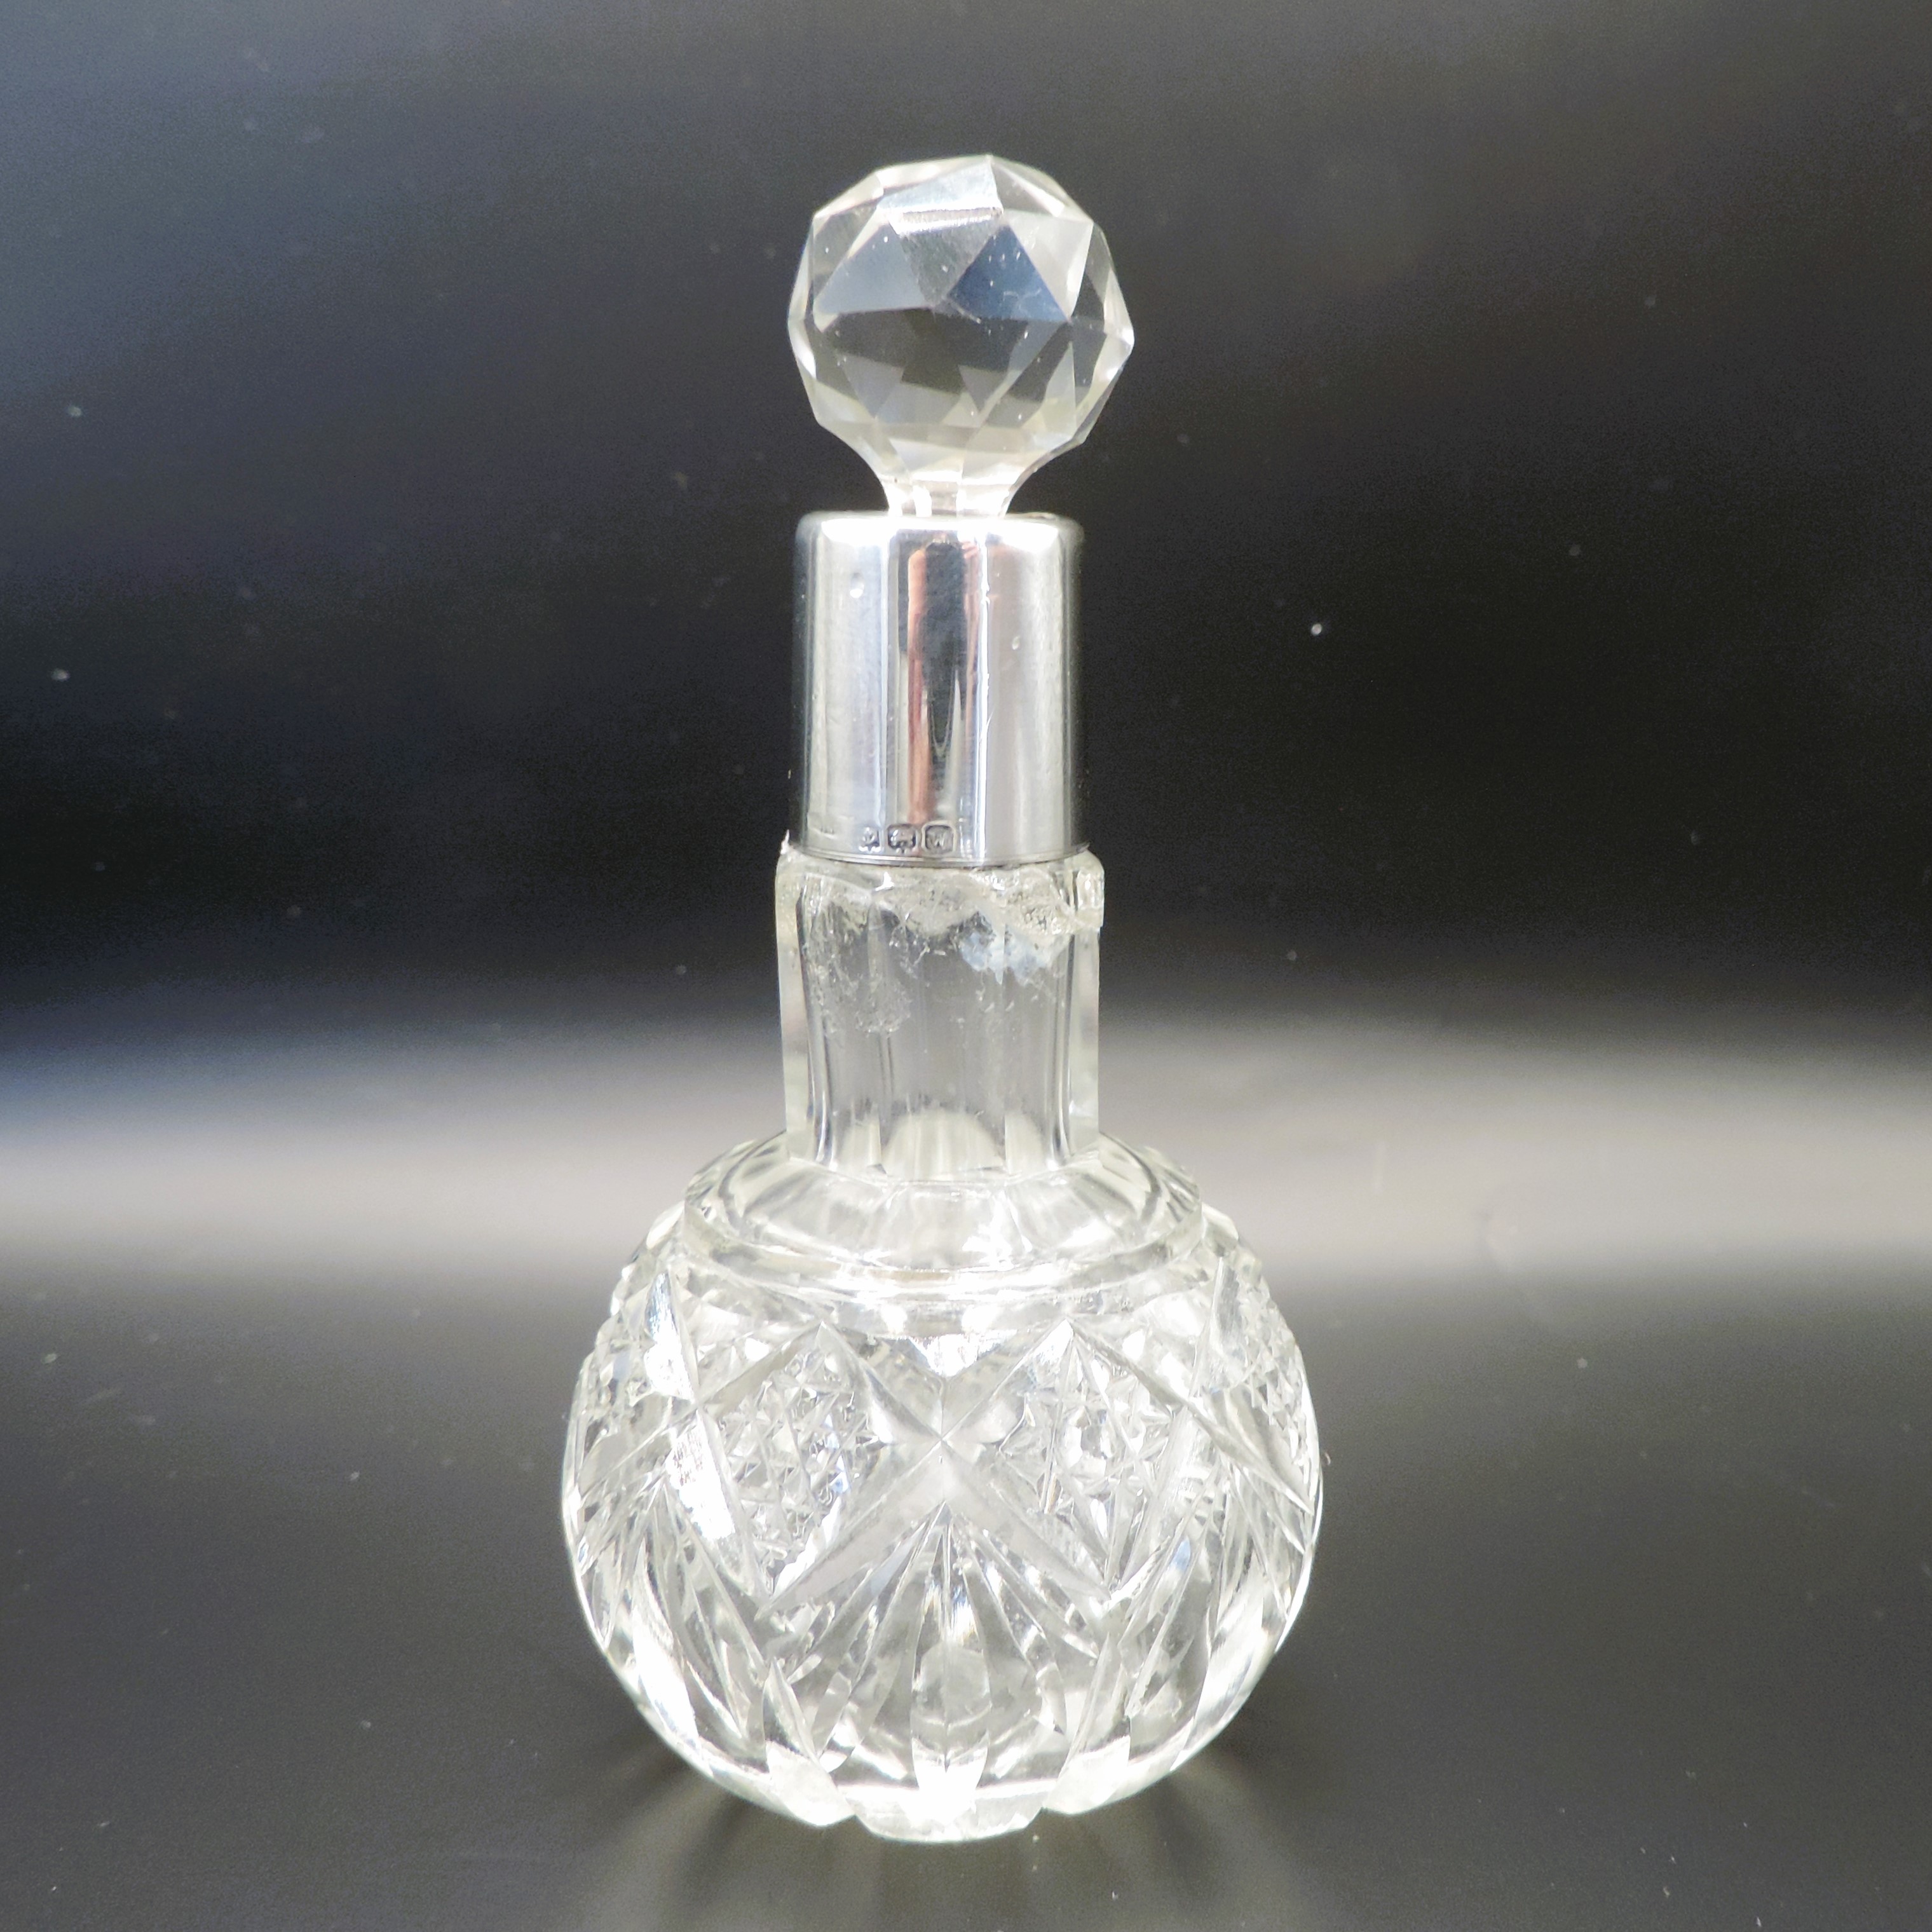 Antique George V Cut Glass Perfume Bottle Silver Collar Hallmark Date 1921 - Image 4 of 4